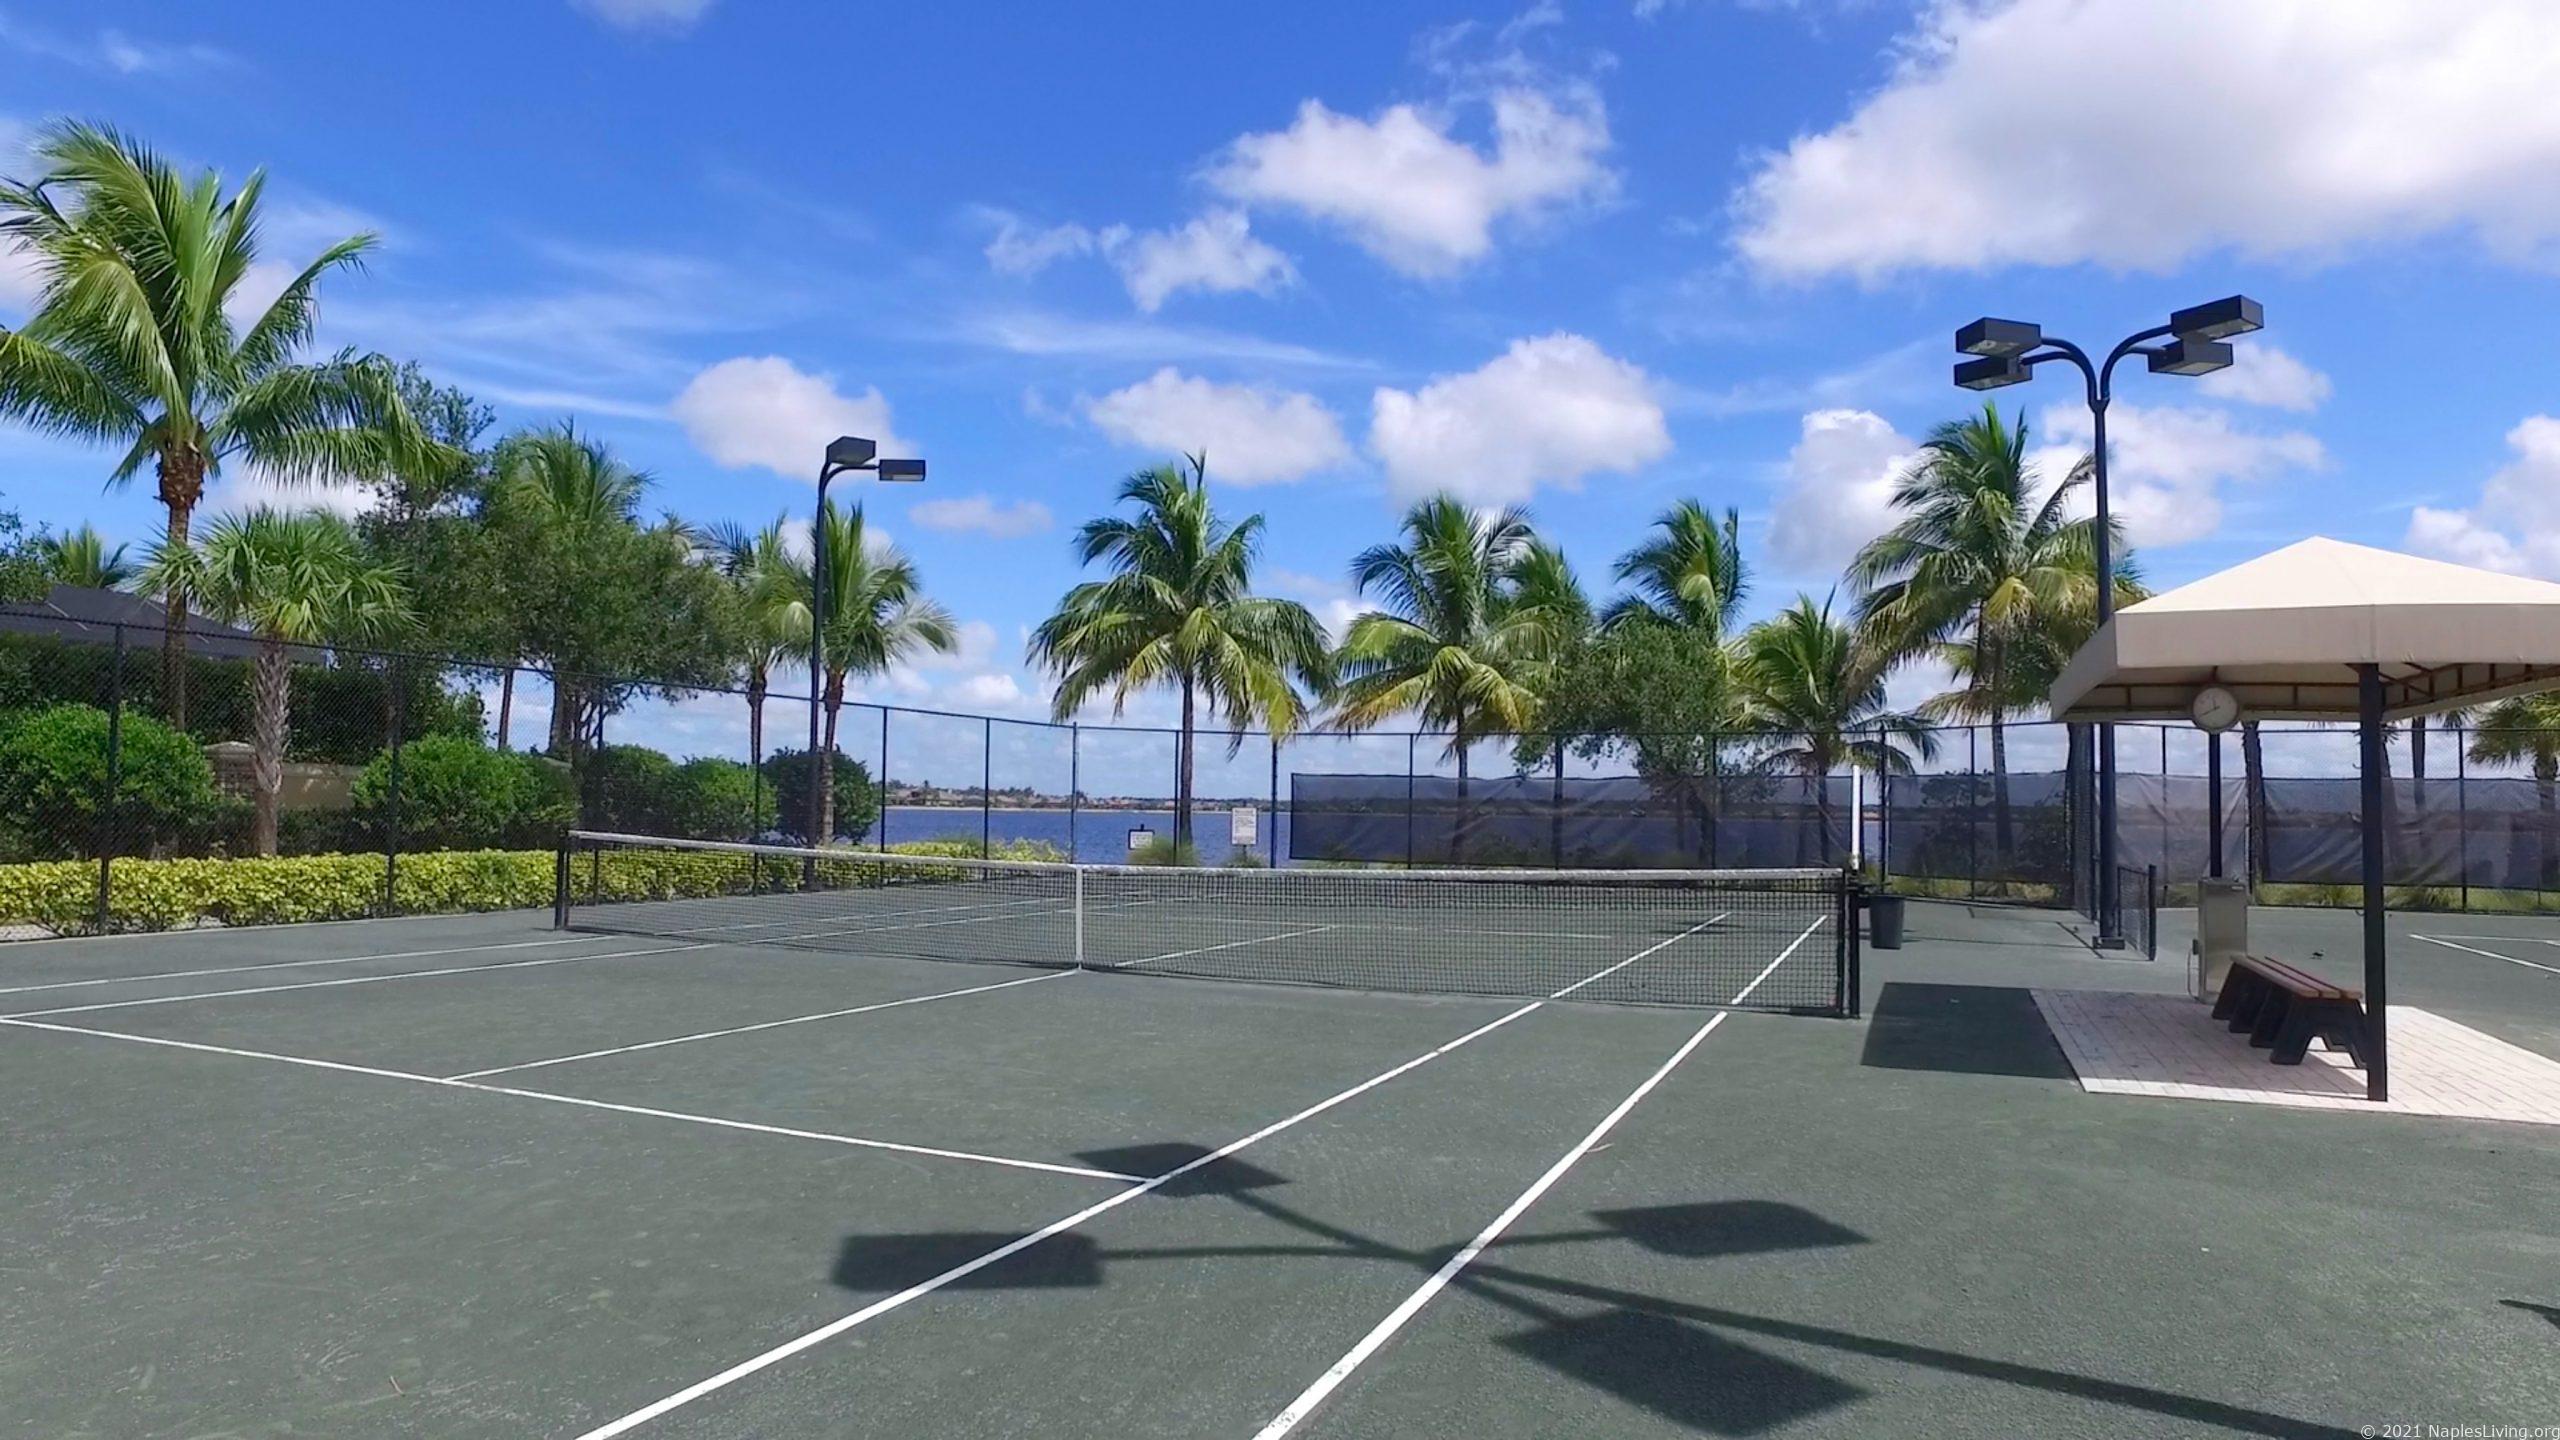 The Quarry Community - Tennis Courts